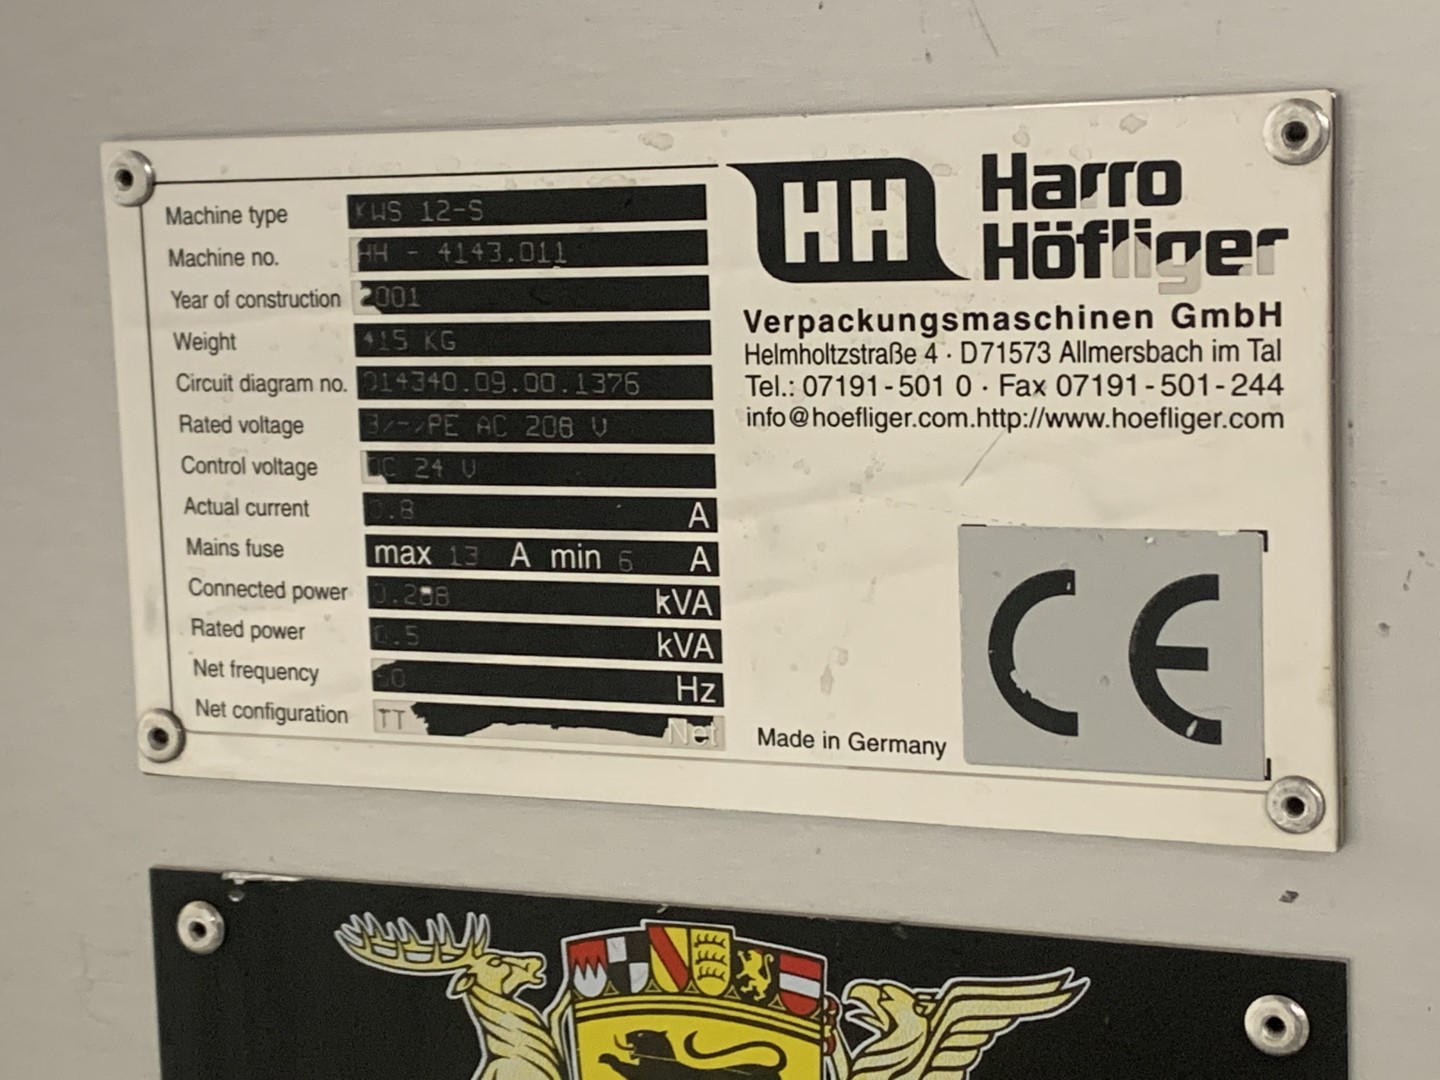 Harro Hofliger Capsule Checkweigher, Type KWS 12-S